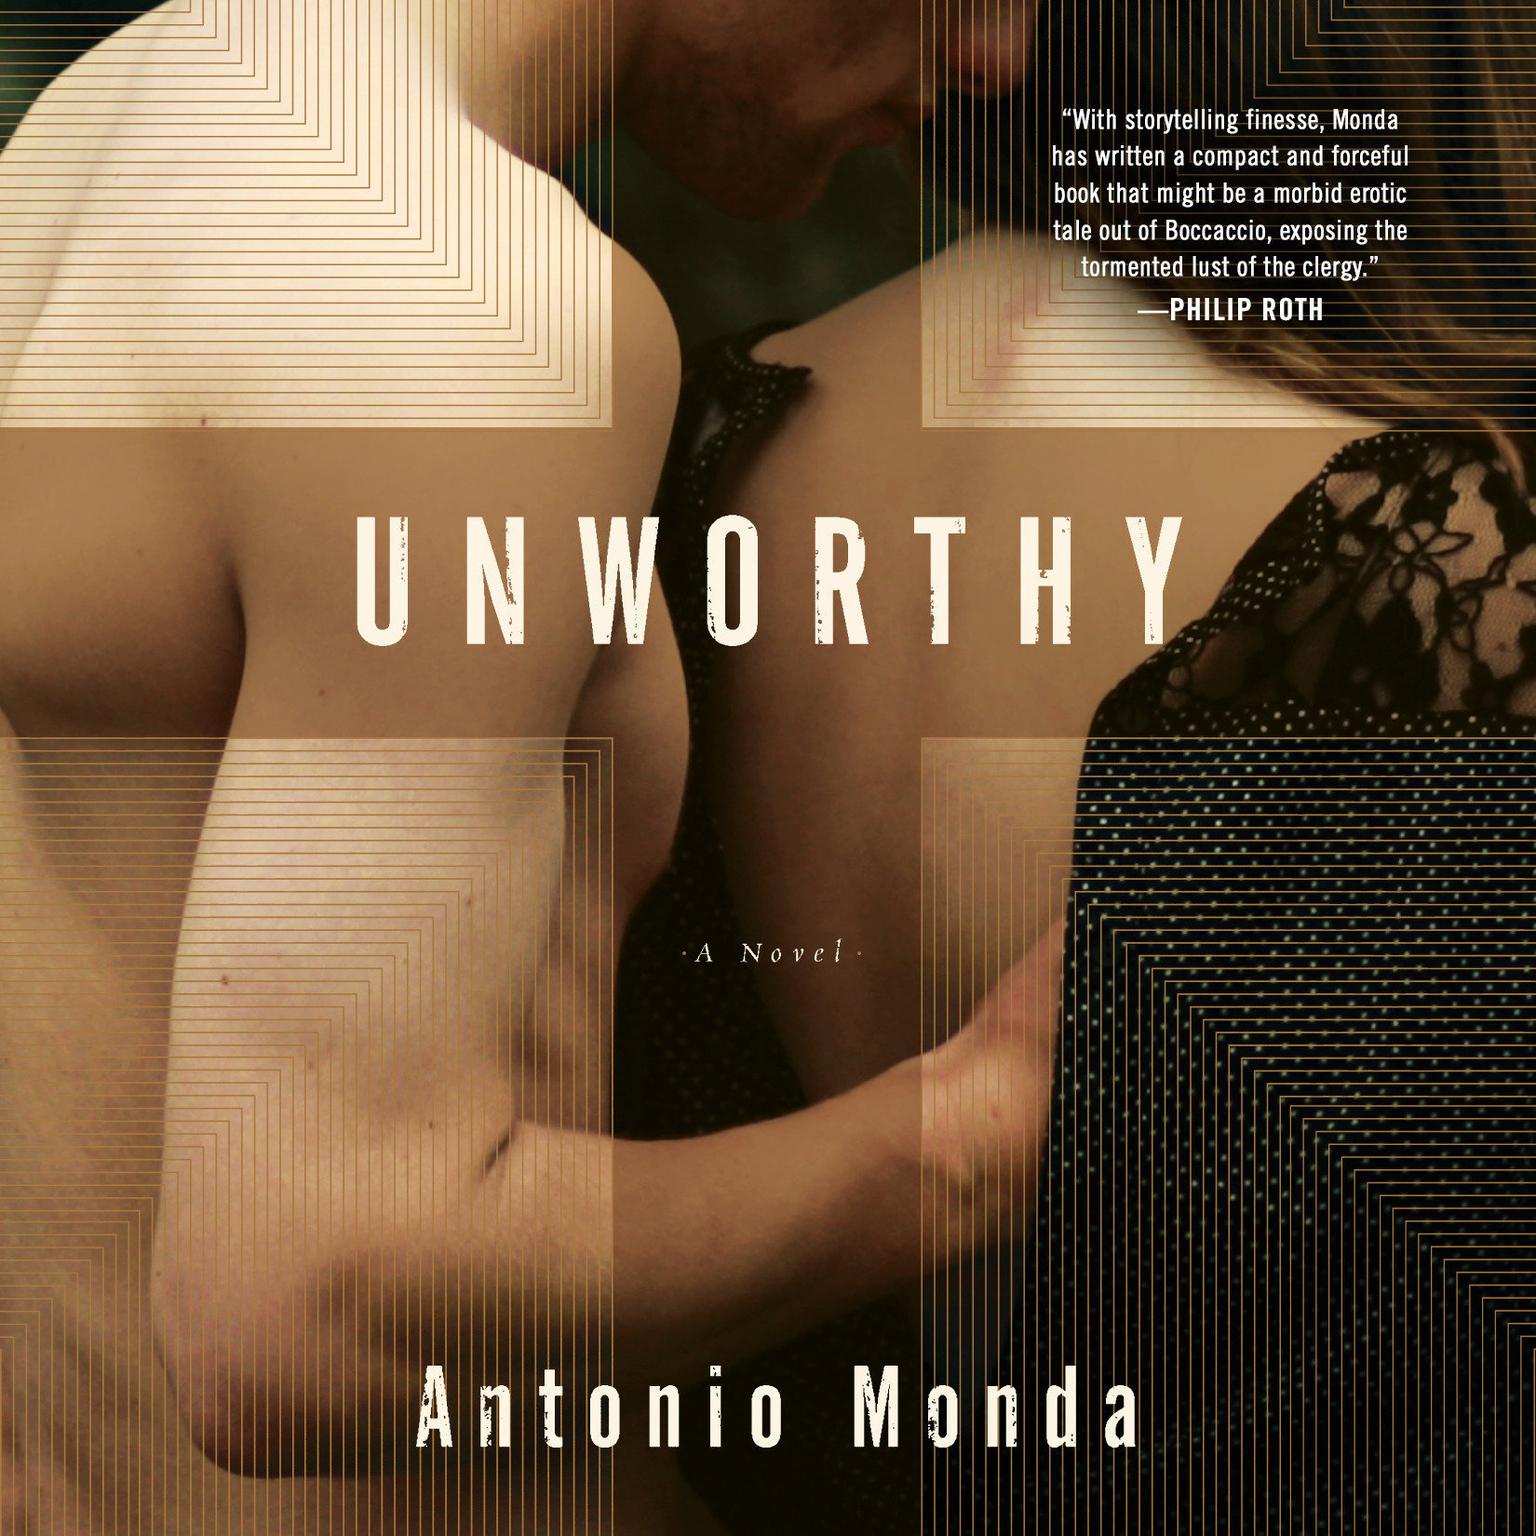 Unworthy: A Novel Audiobook, by Antonio Monda